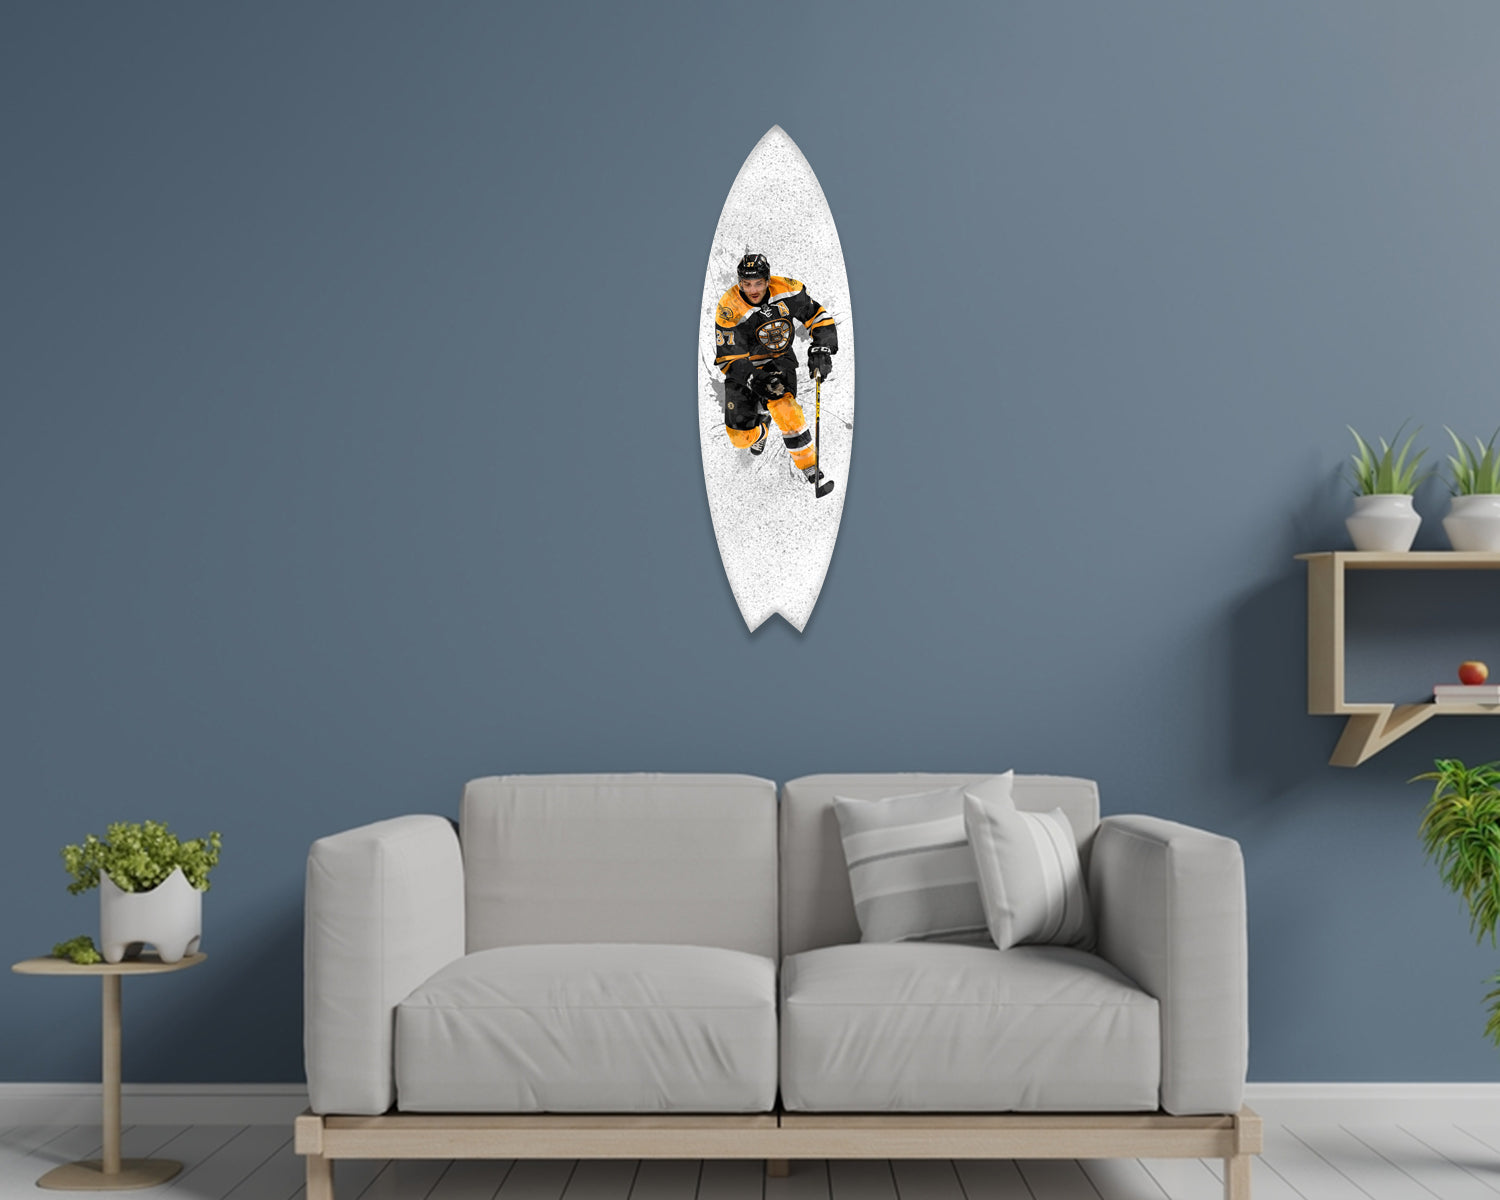 Patrice Bergeron Acrylic Surfboard Wall Art 